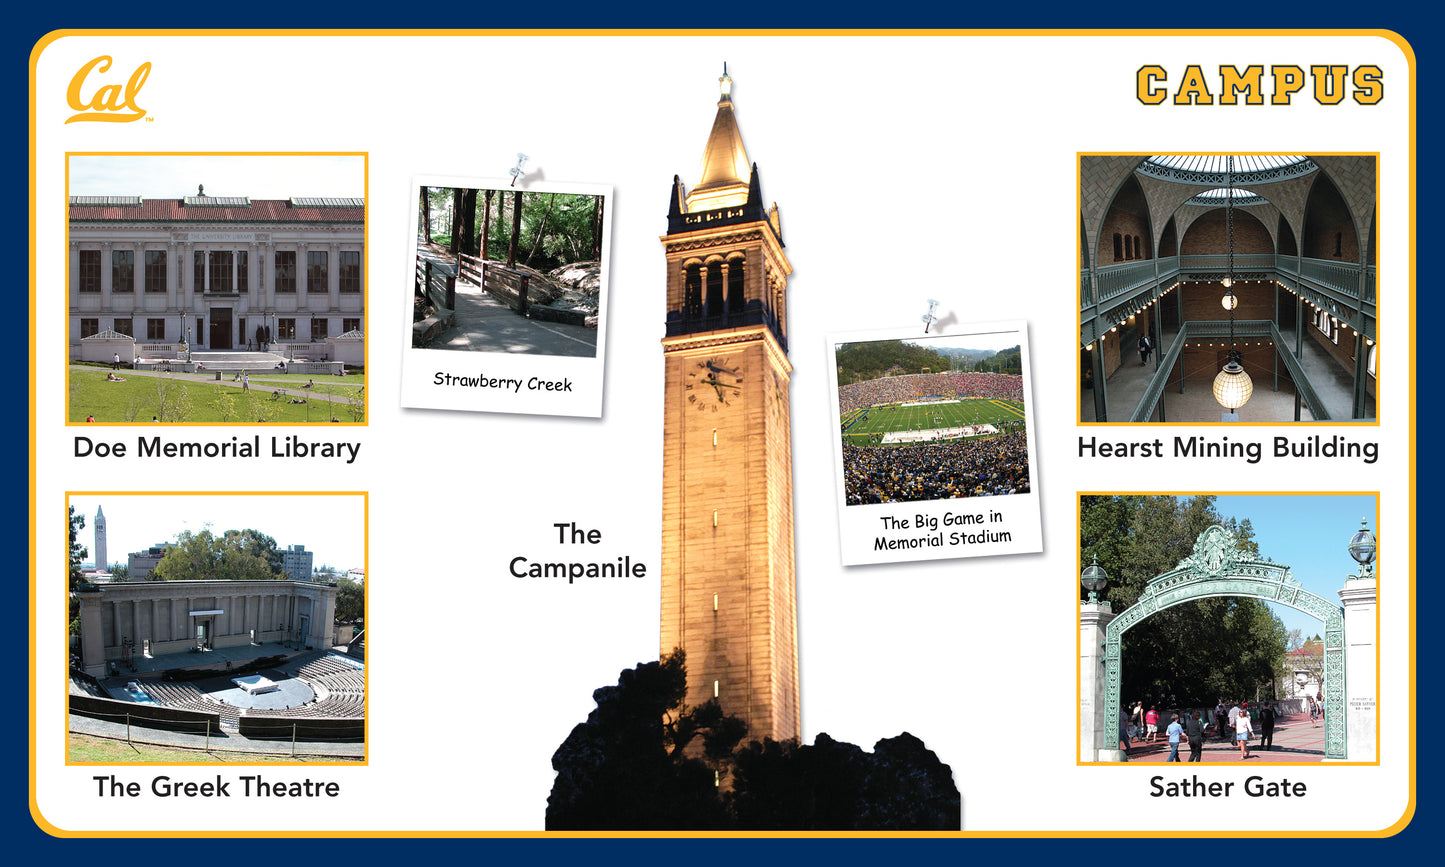 UC Berkeley 101 Board Book